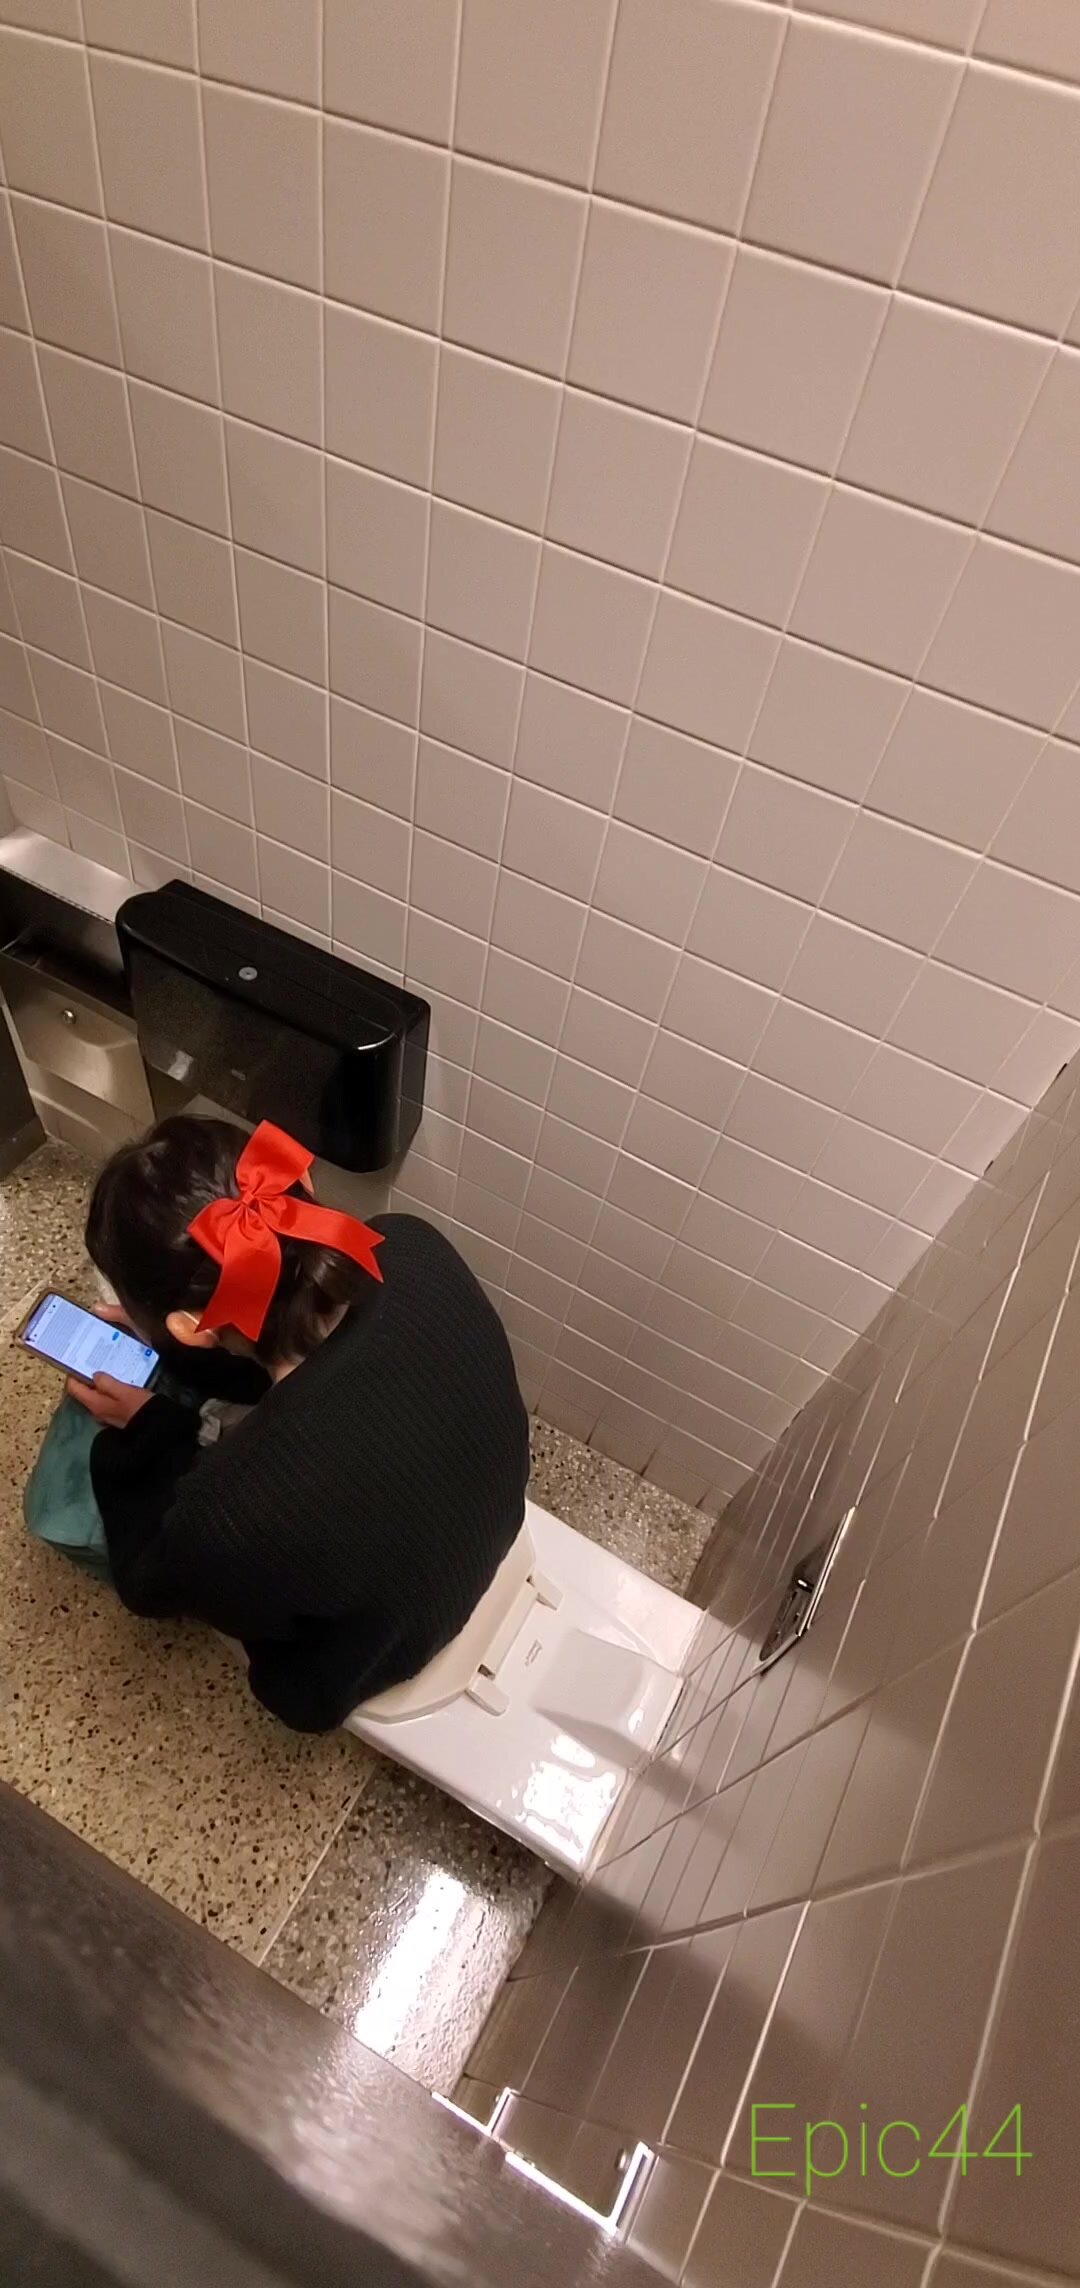 Girl pooping in public toilet - video 10 pic